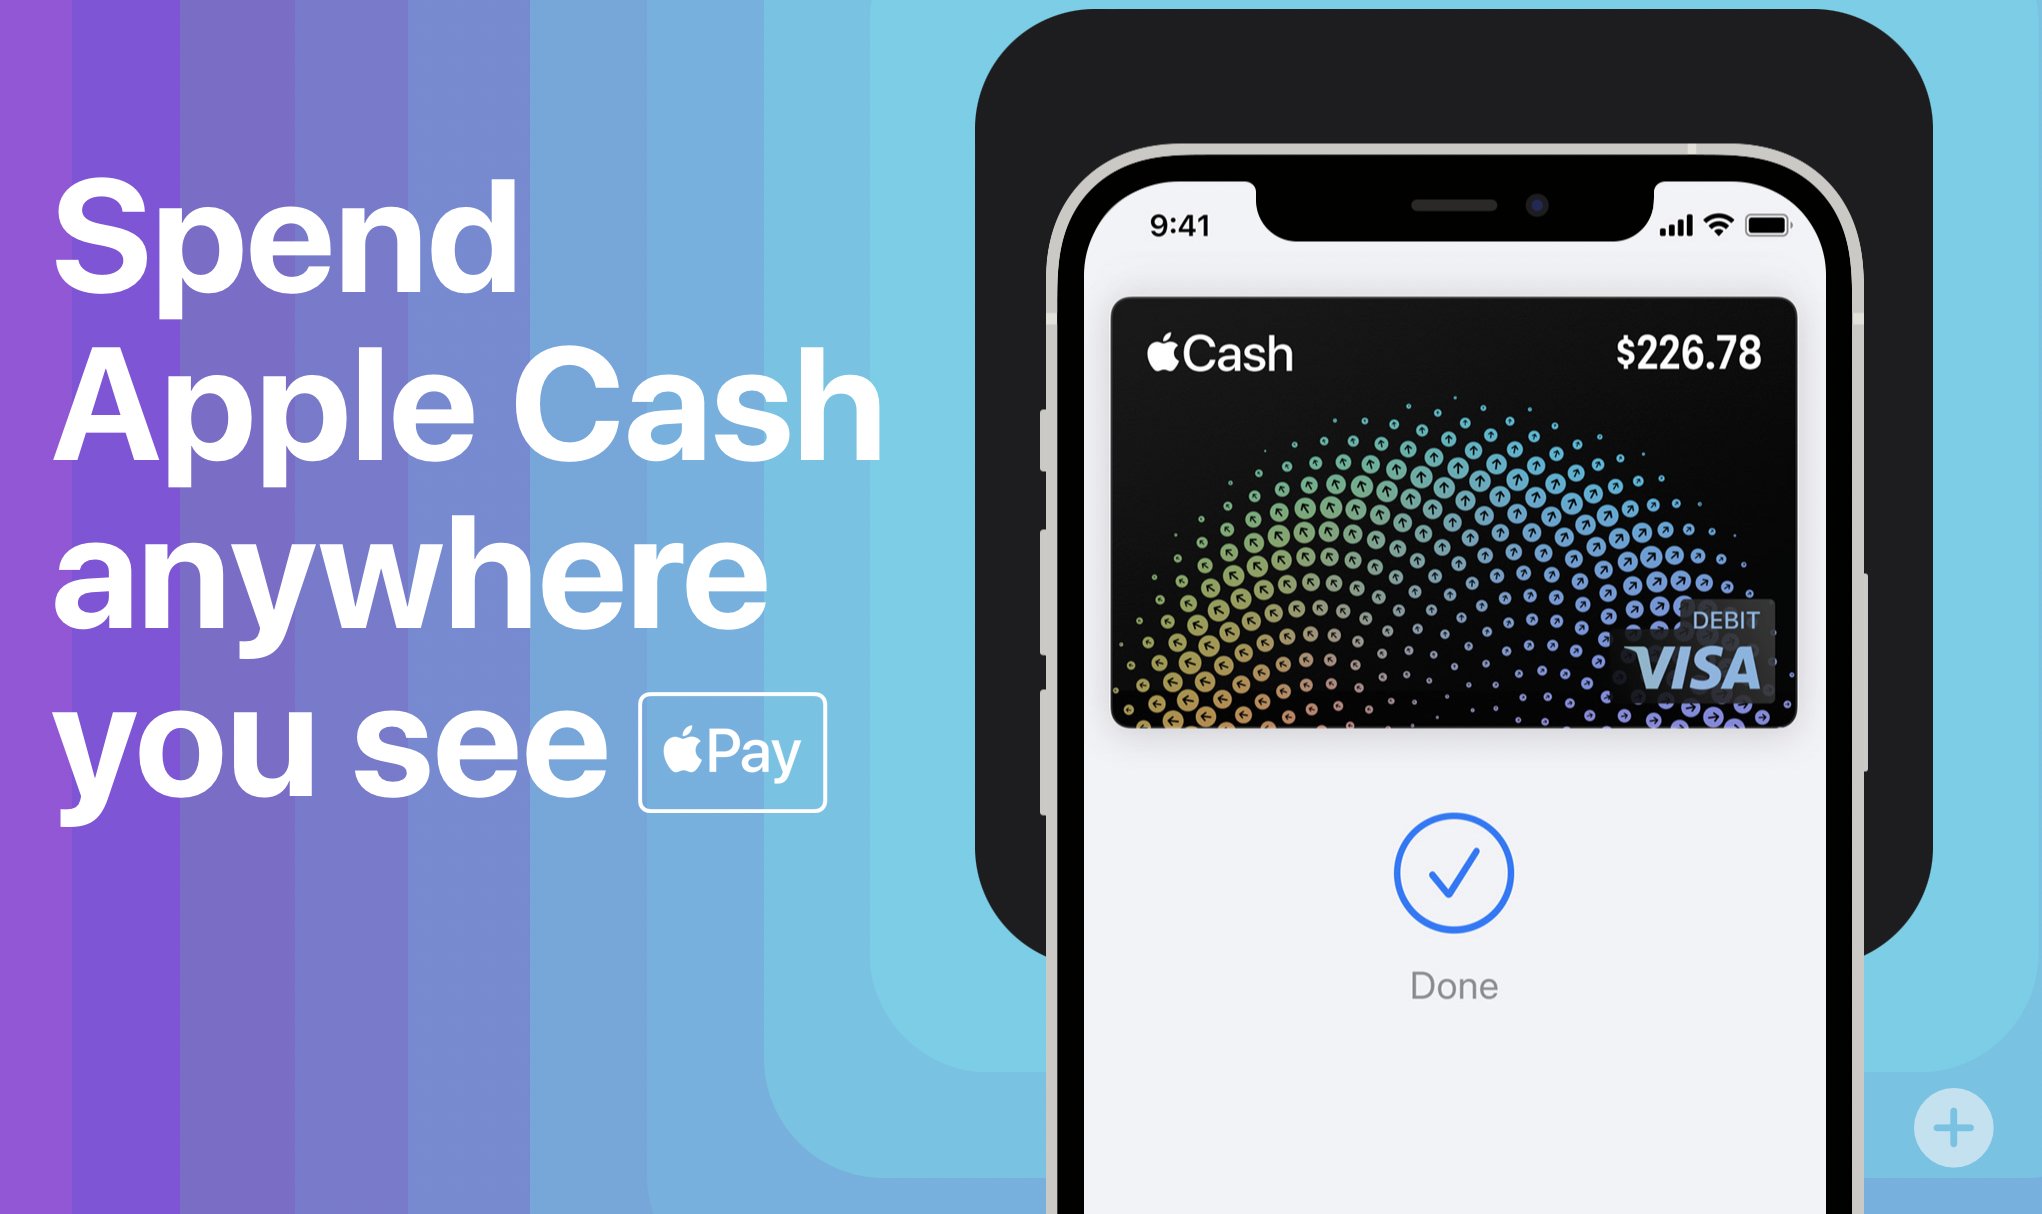 Splash screens showcasing Apple's virtual Apple Pay Cash debit card on the Visa network